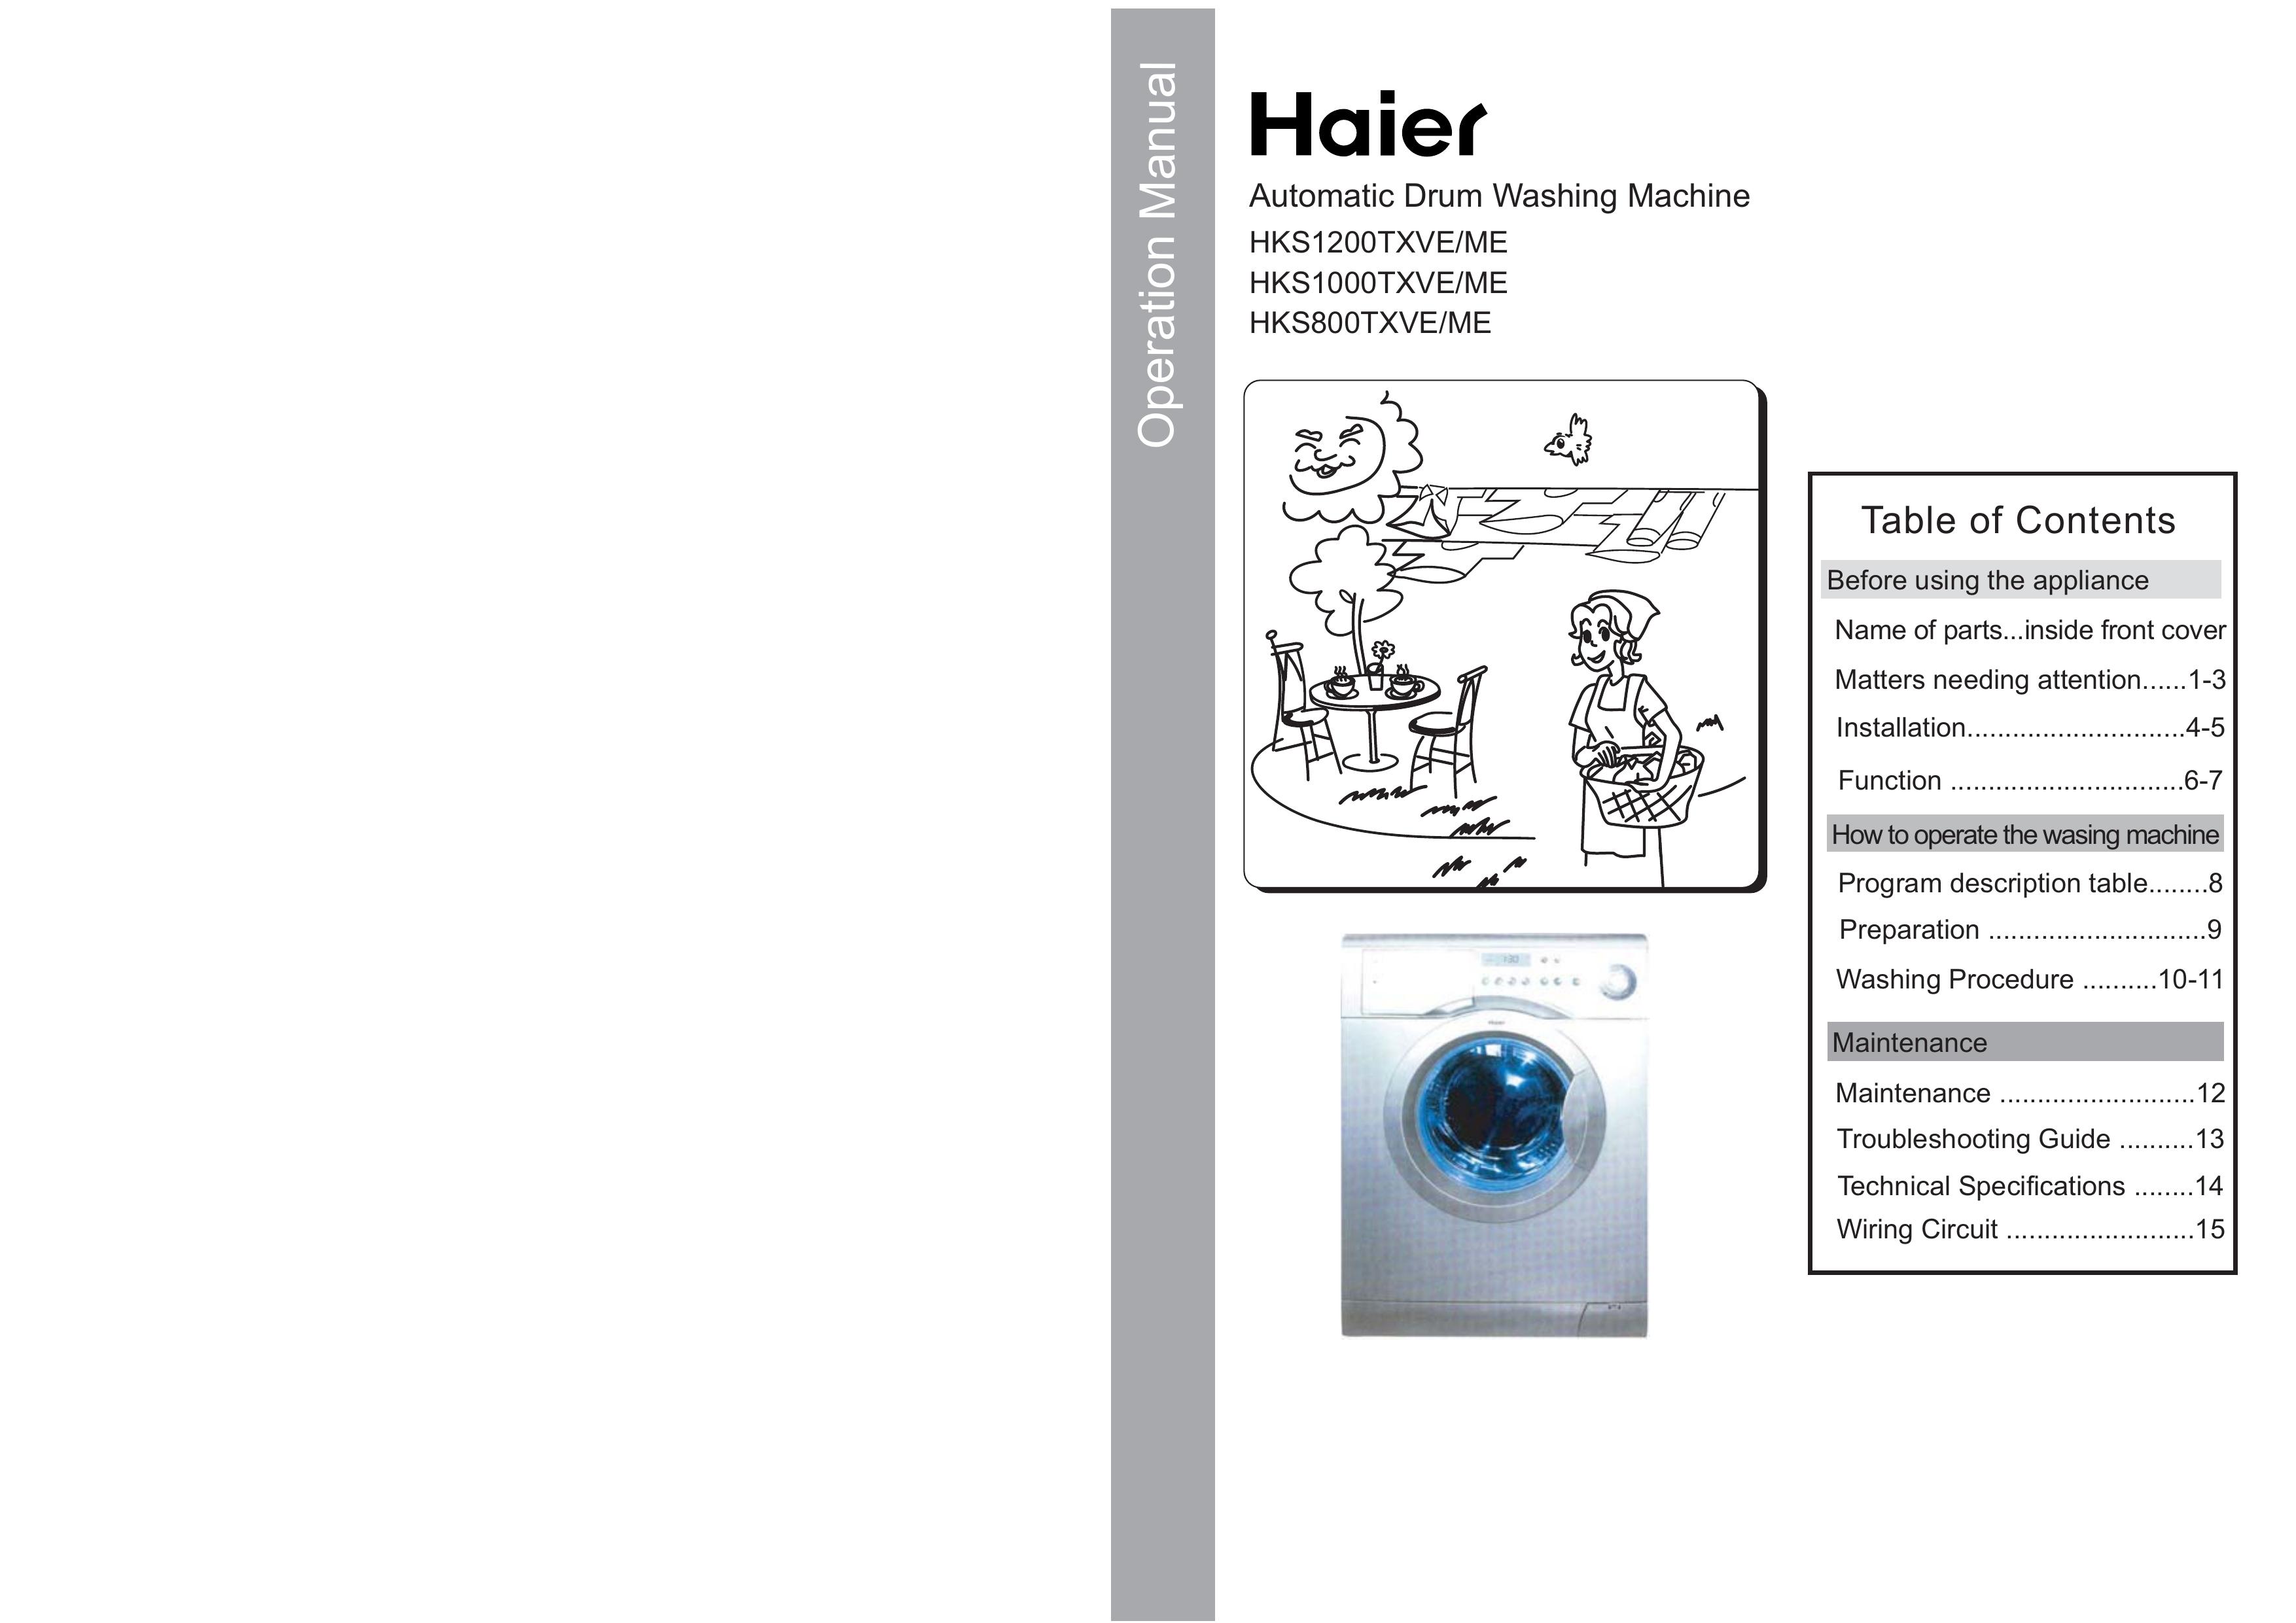 Haier HKS1200TXME Washer User Manual